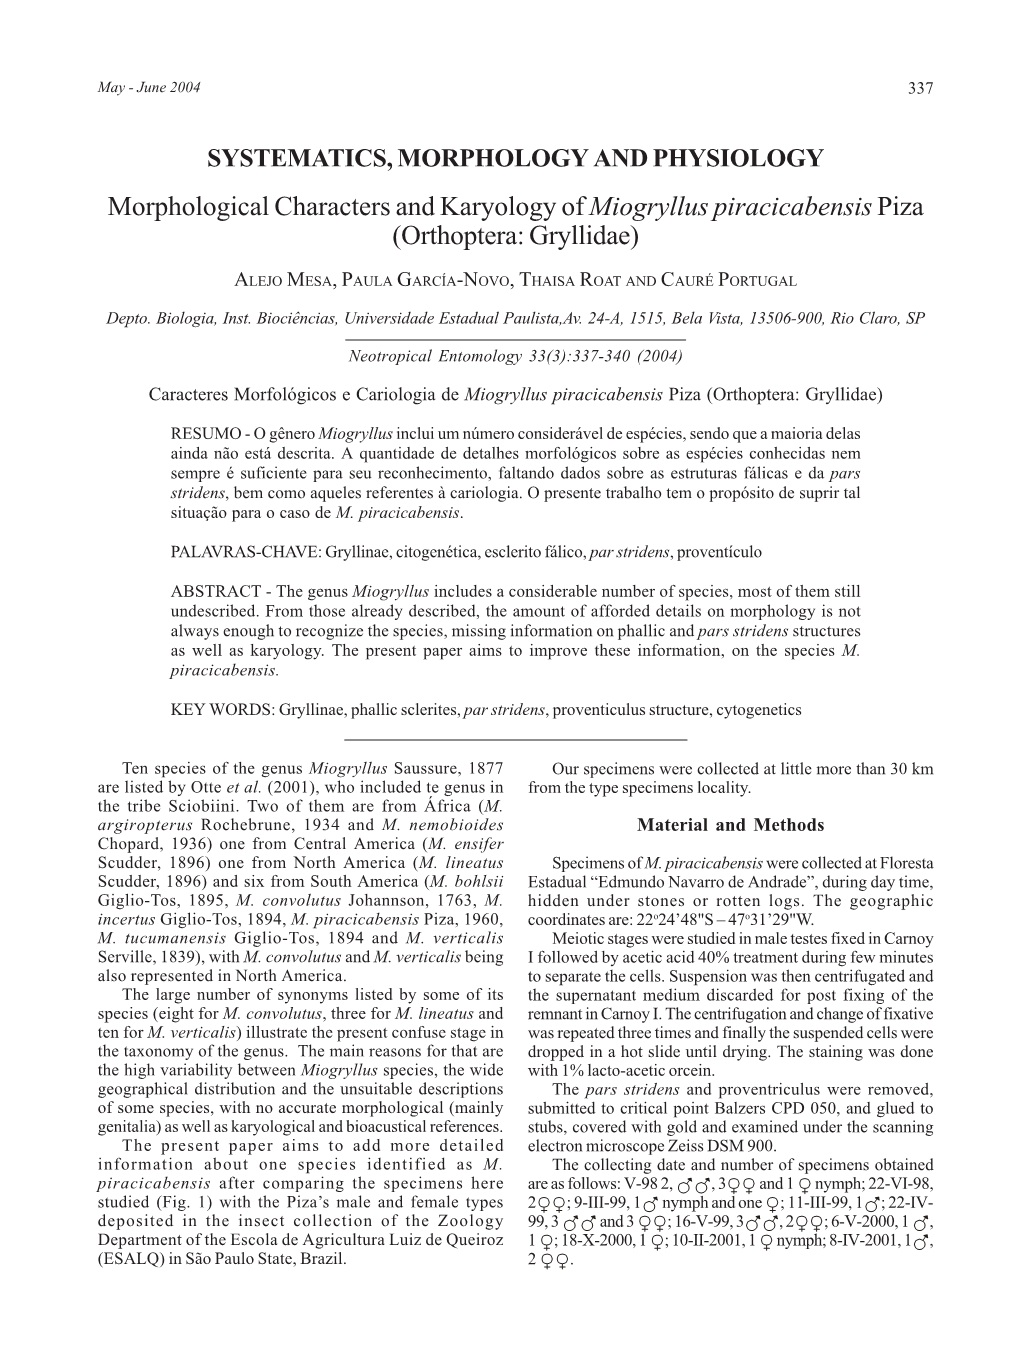 Morphological Characters and Karyology of Miogryllus Piracicabensis Piza (Orthoptera: Gryllidae)